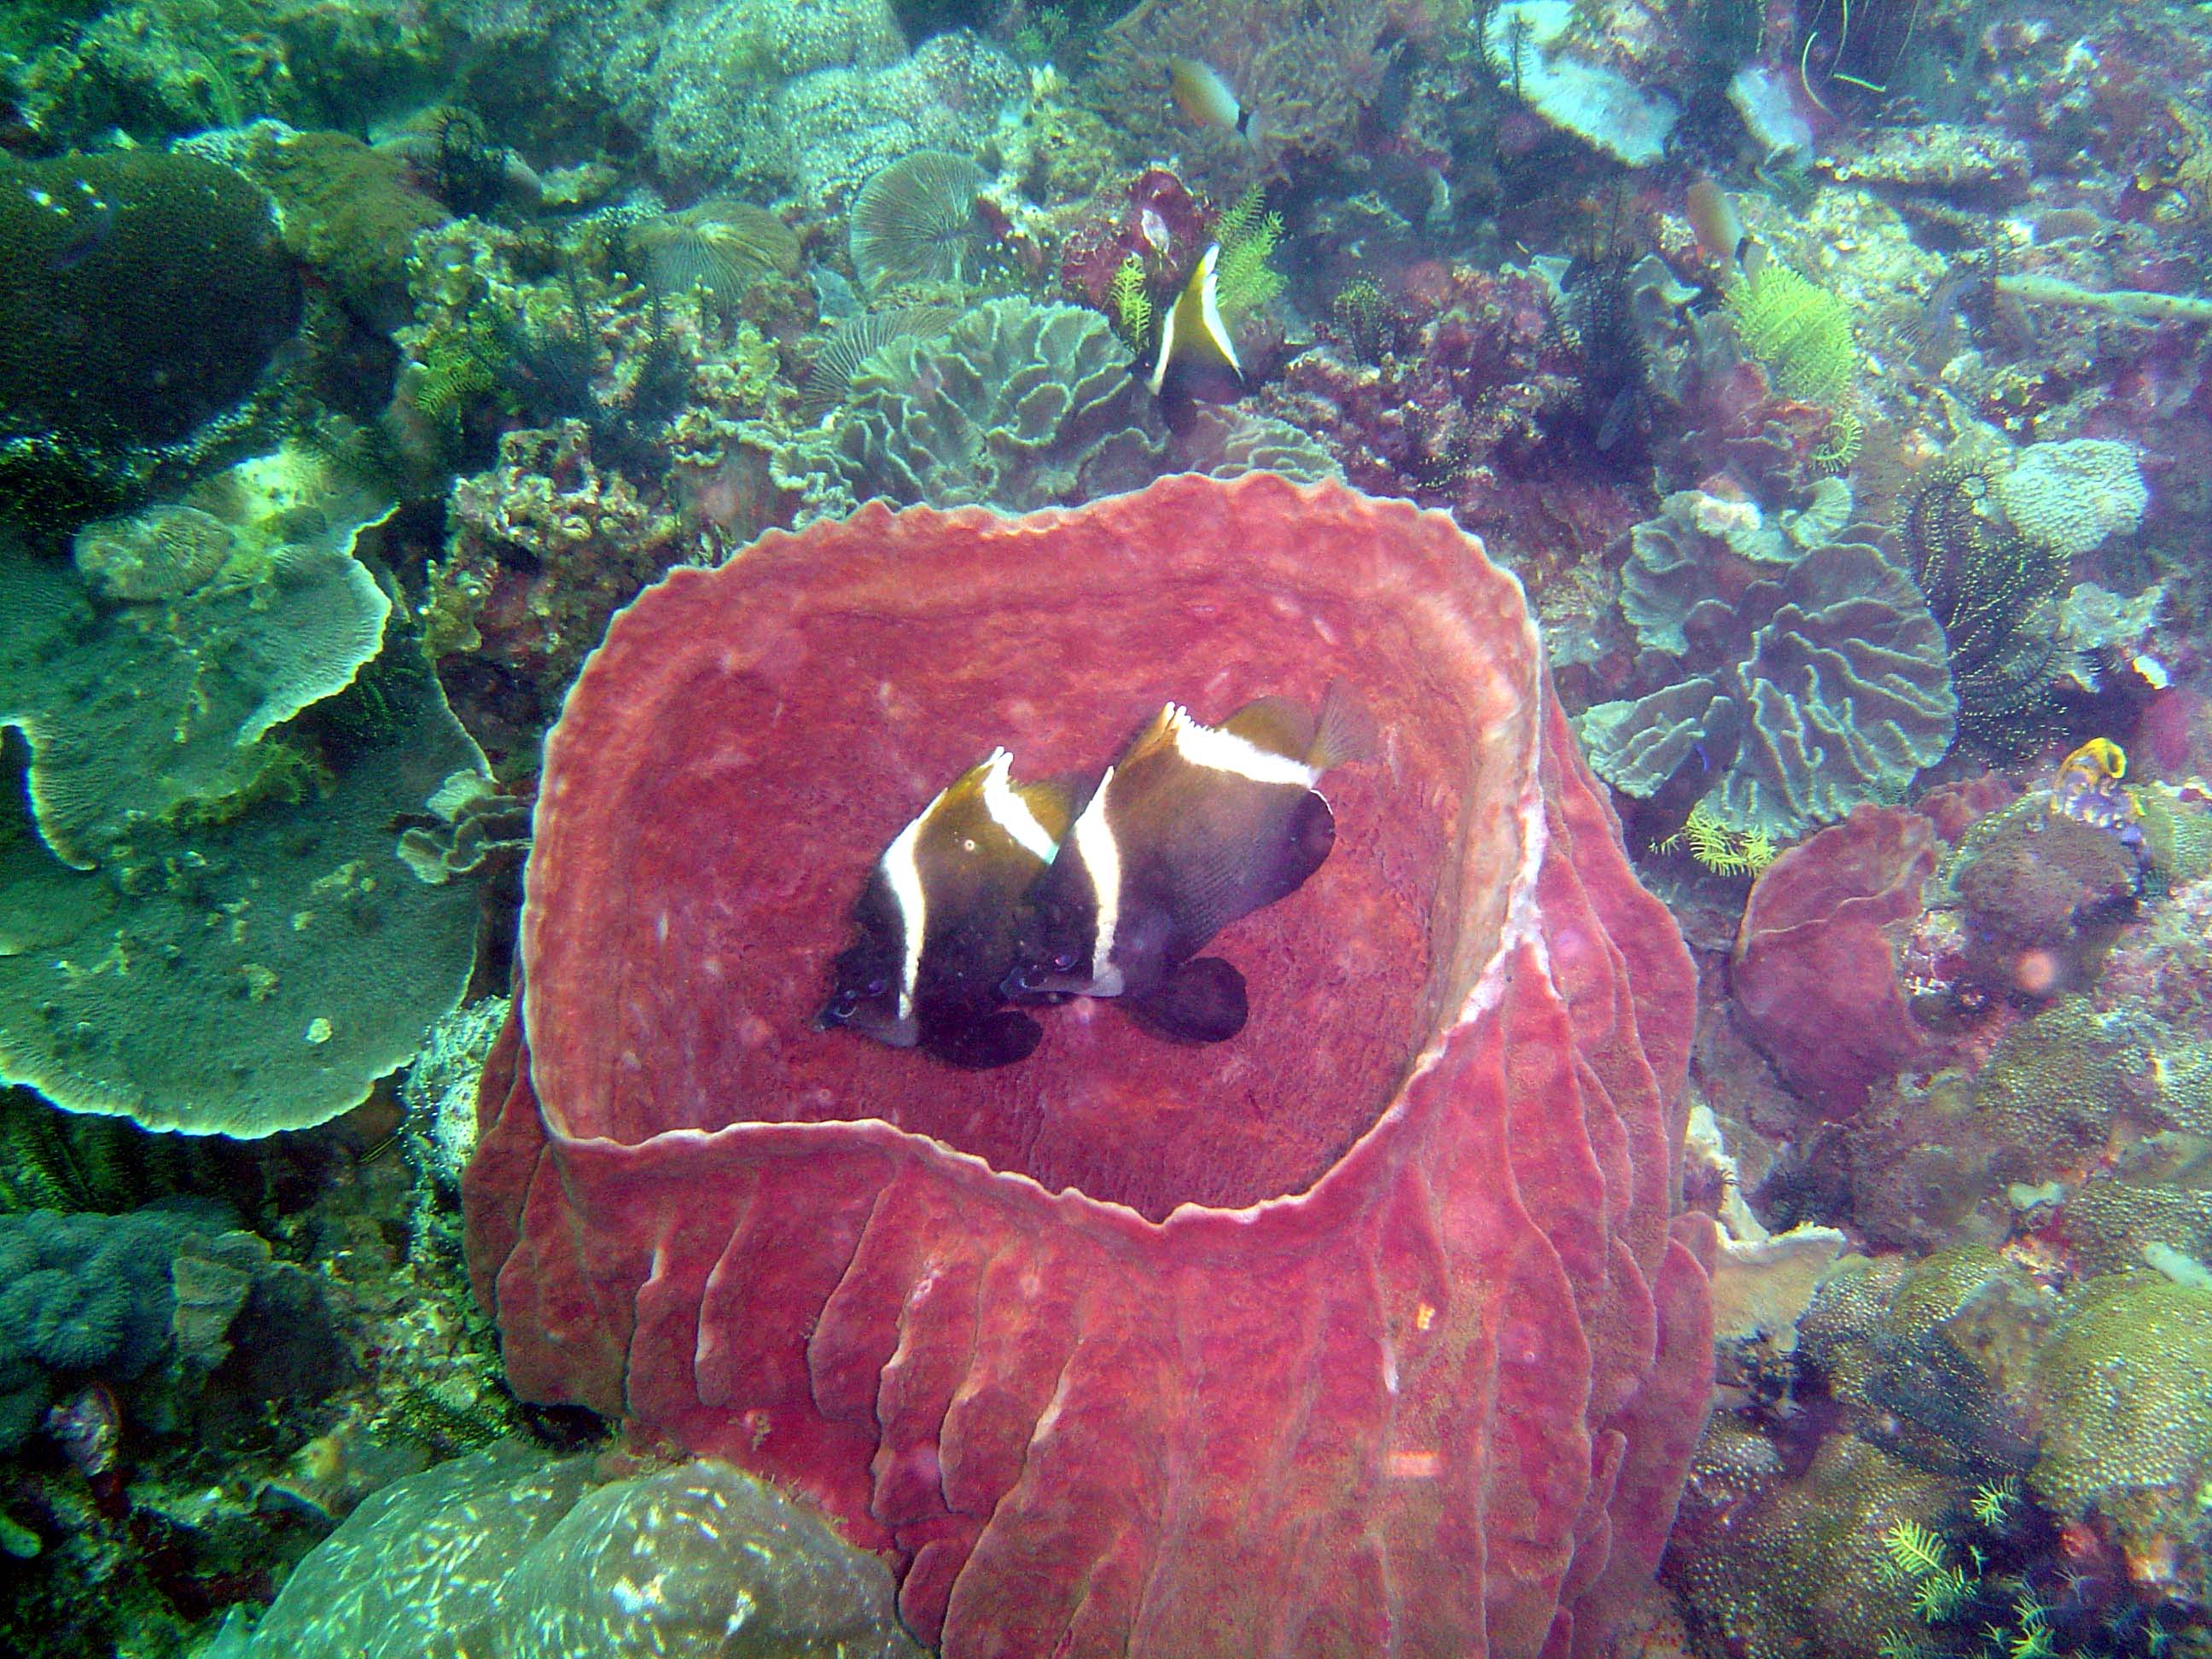 Humphead Bannerfish in Sponge